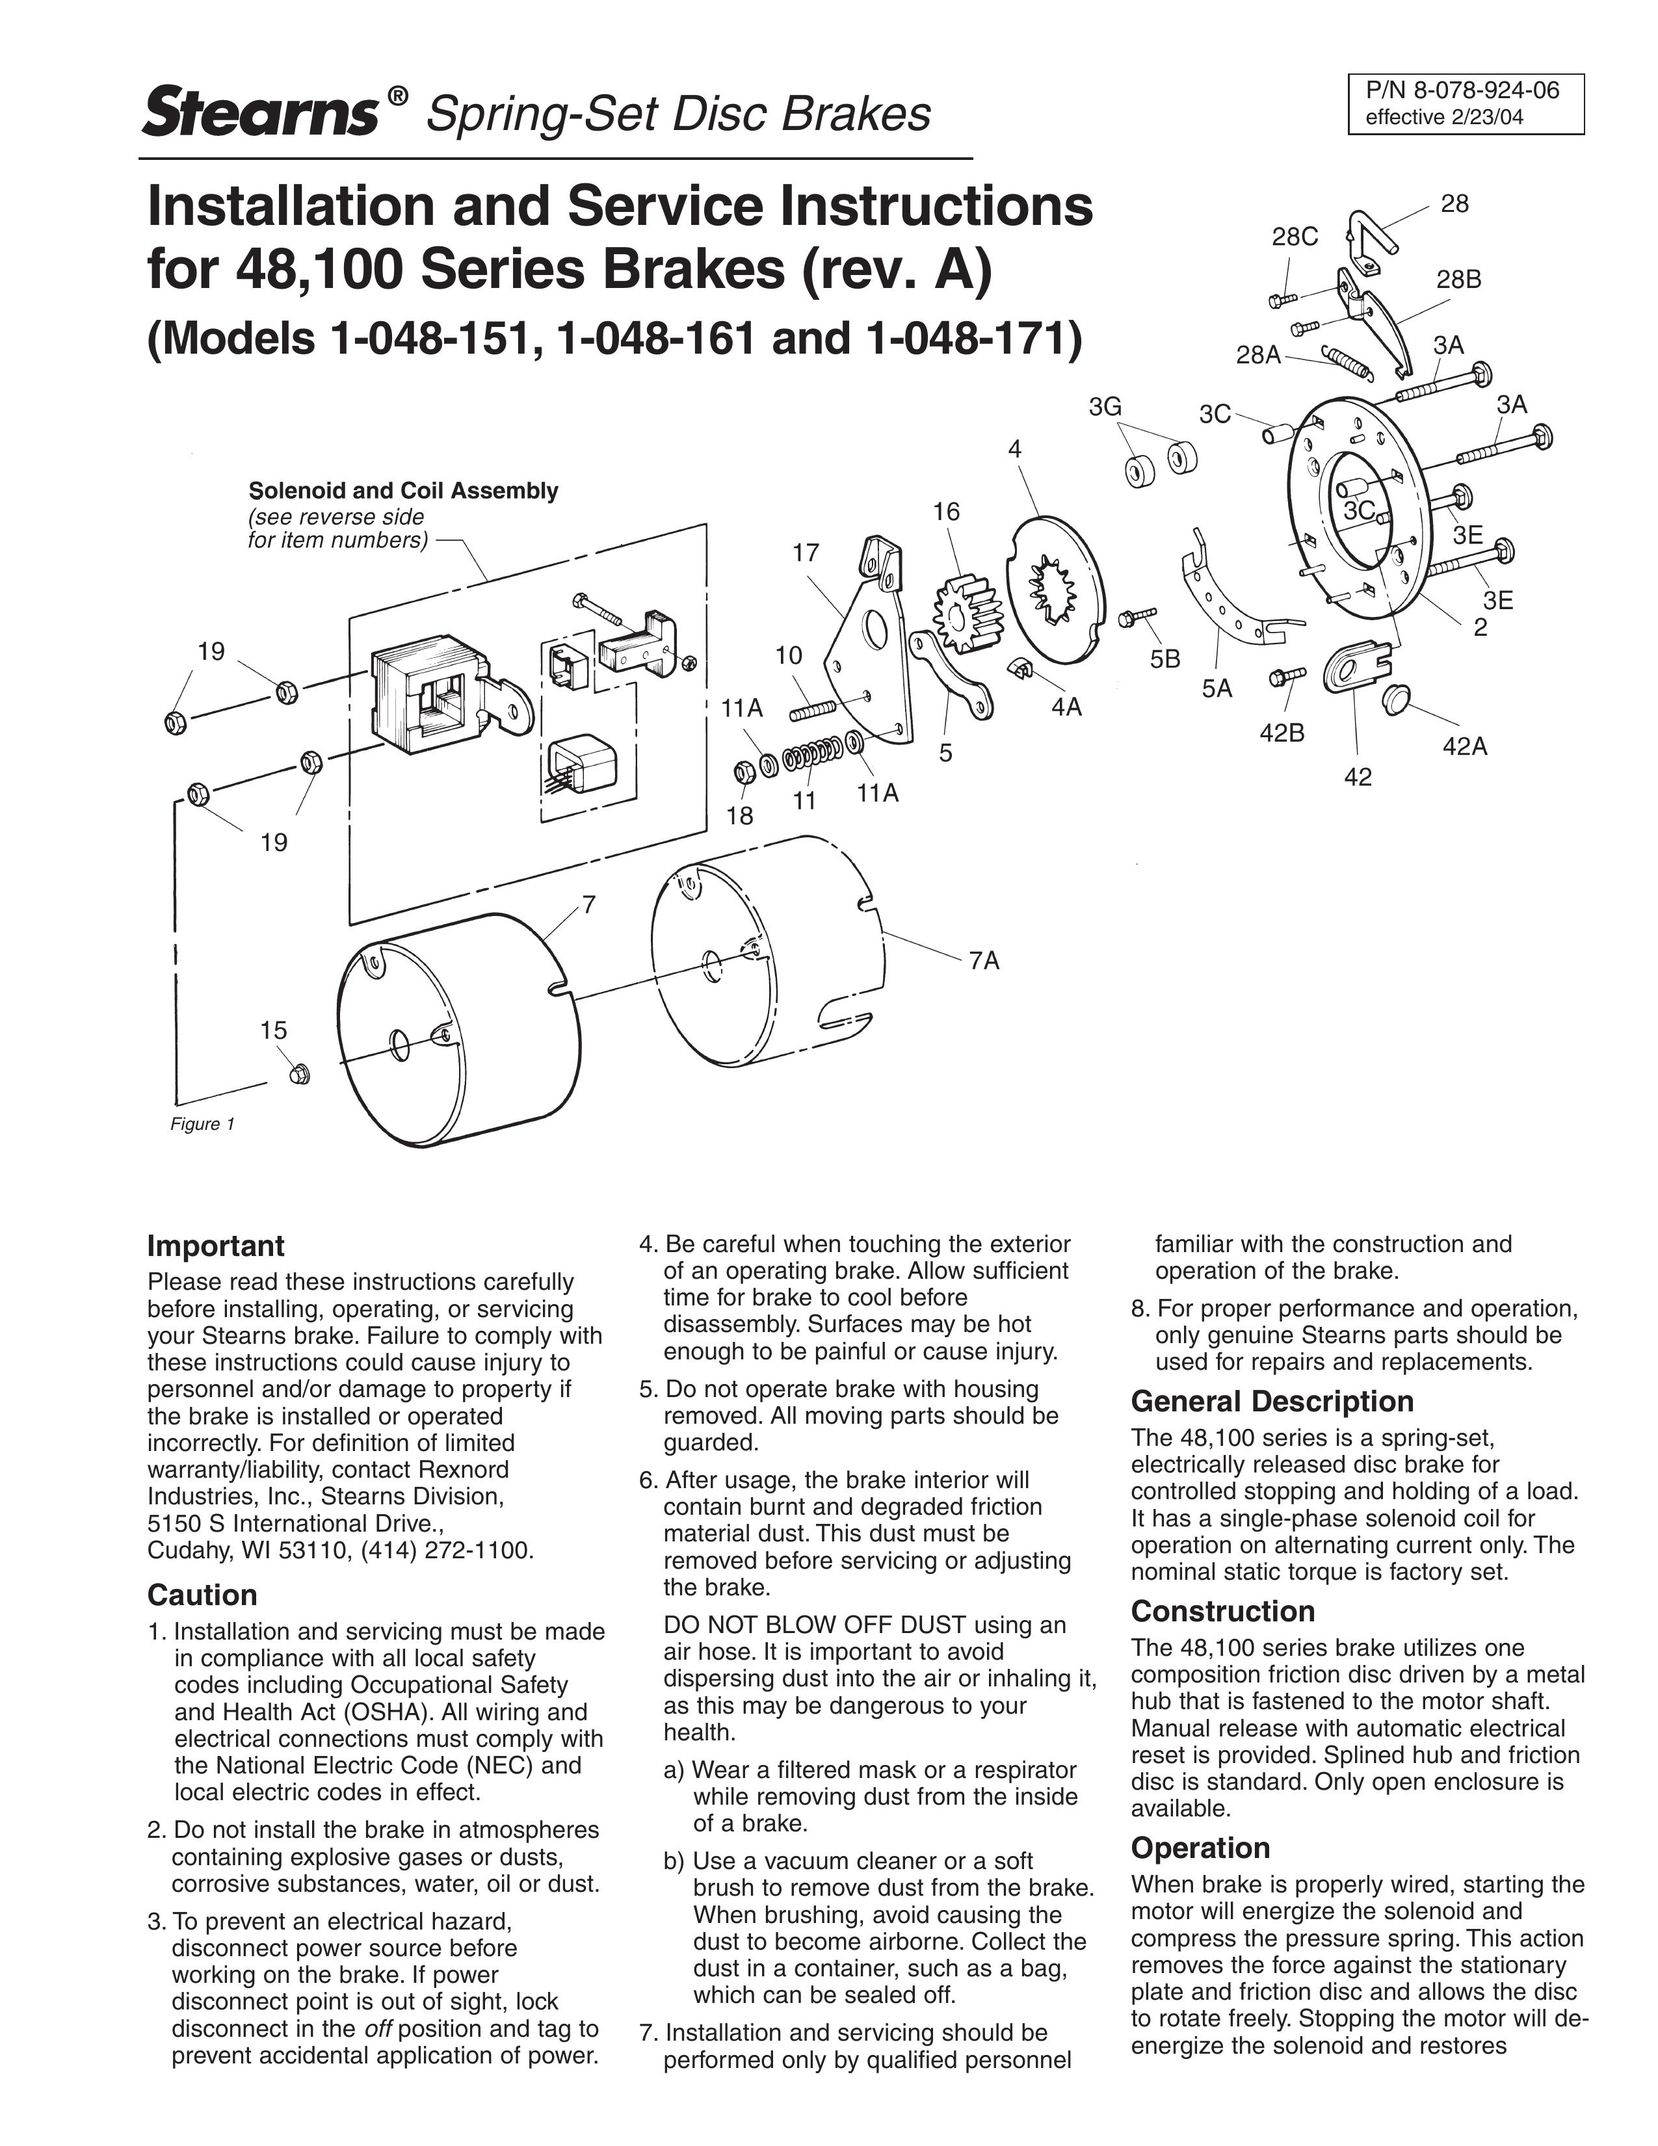 Stearns 1-048-151 Nail Gun User Manual